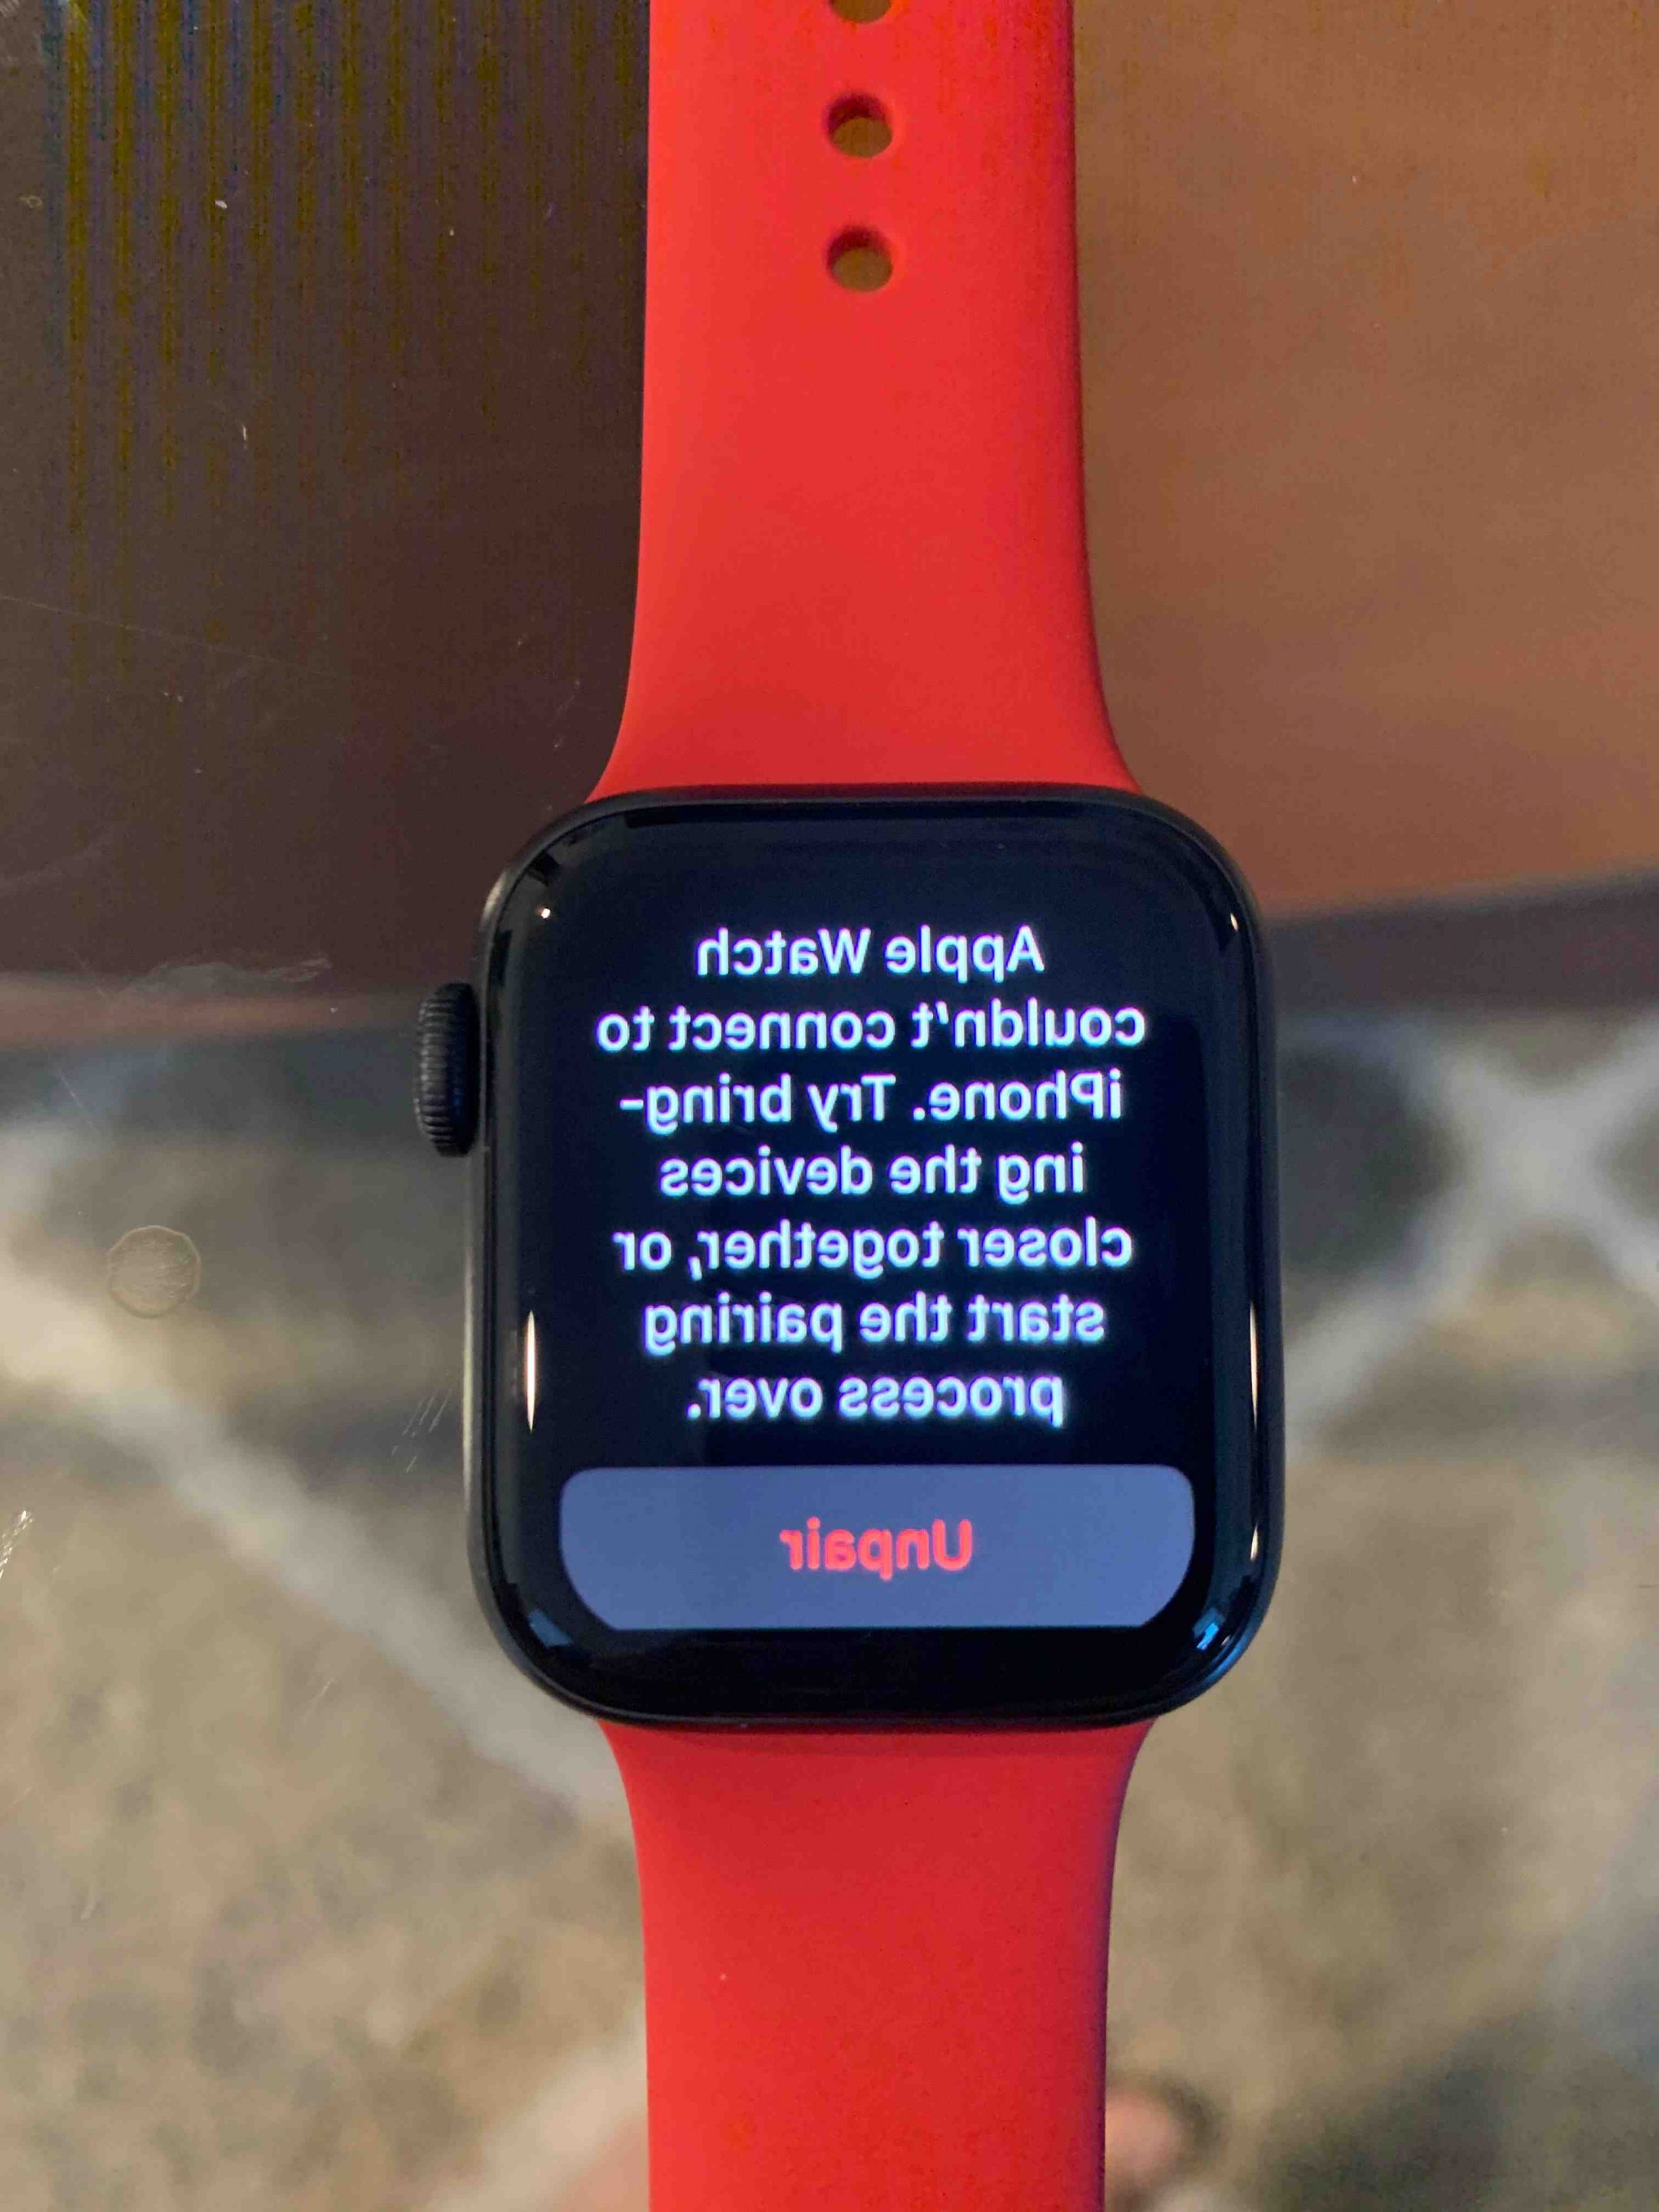 Iphone xr avec apple watch